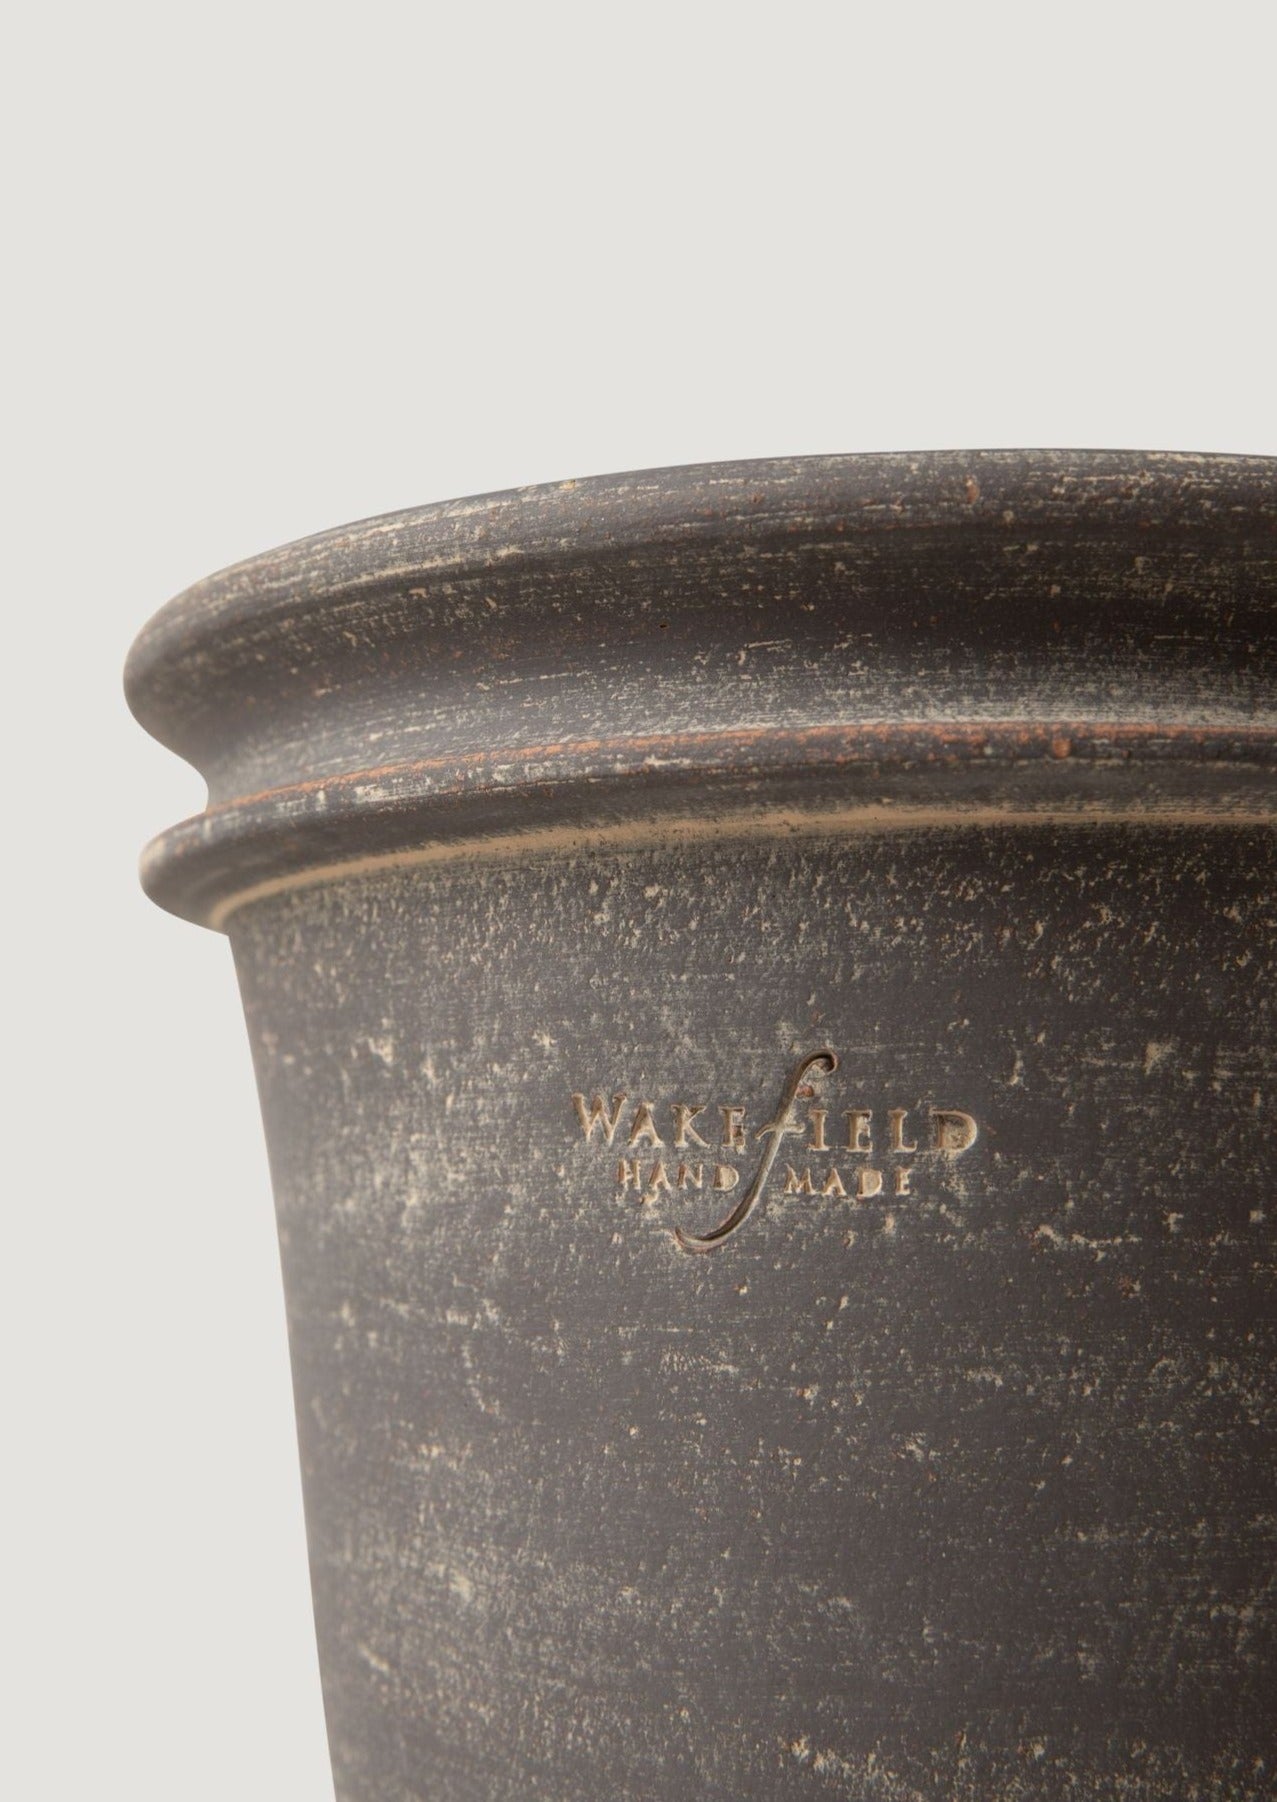 Wakefield Handmade Ceramic Clay Pot at Afloral